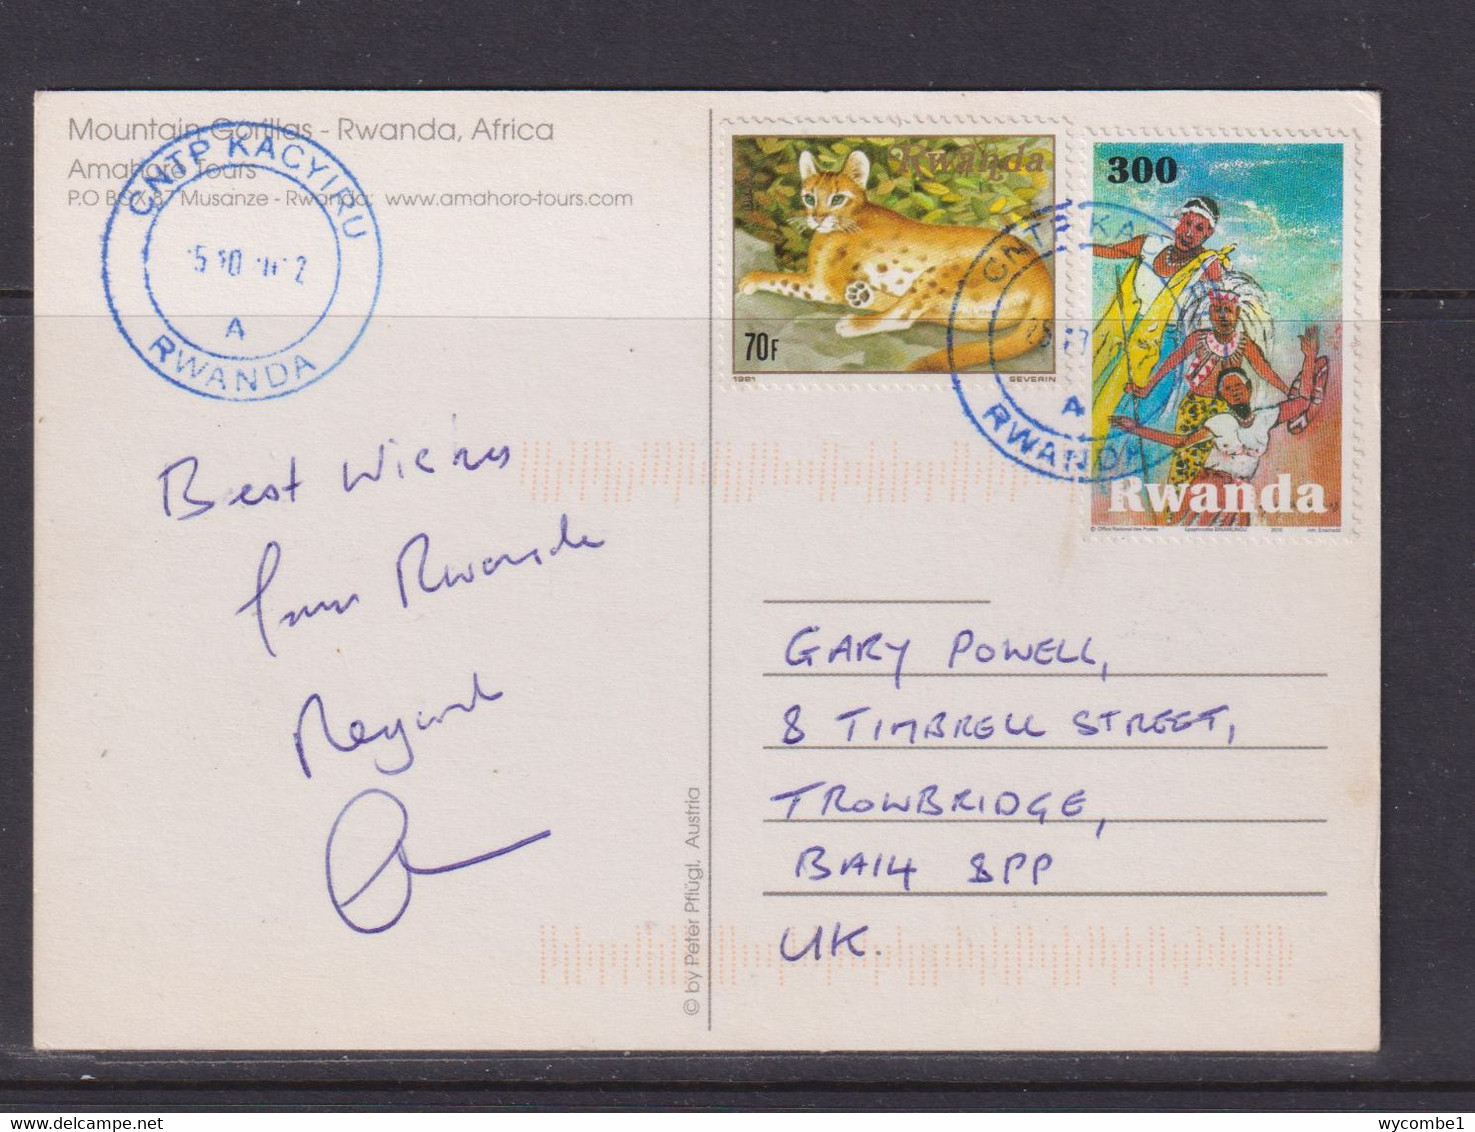 RWANDA - Baby Mountain Gorilla Used Postcard To The UK As Scans - Rwanda